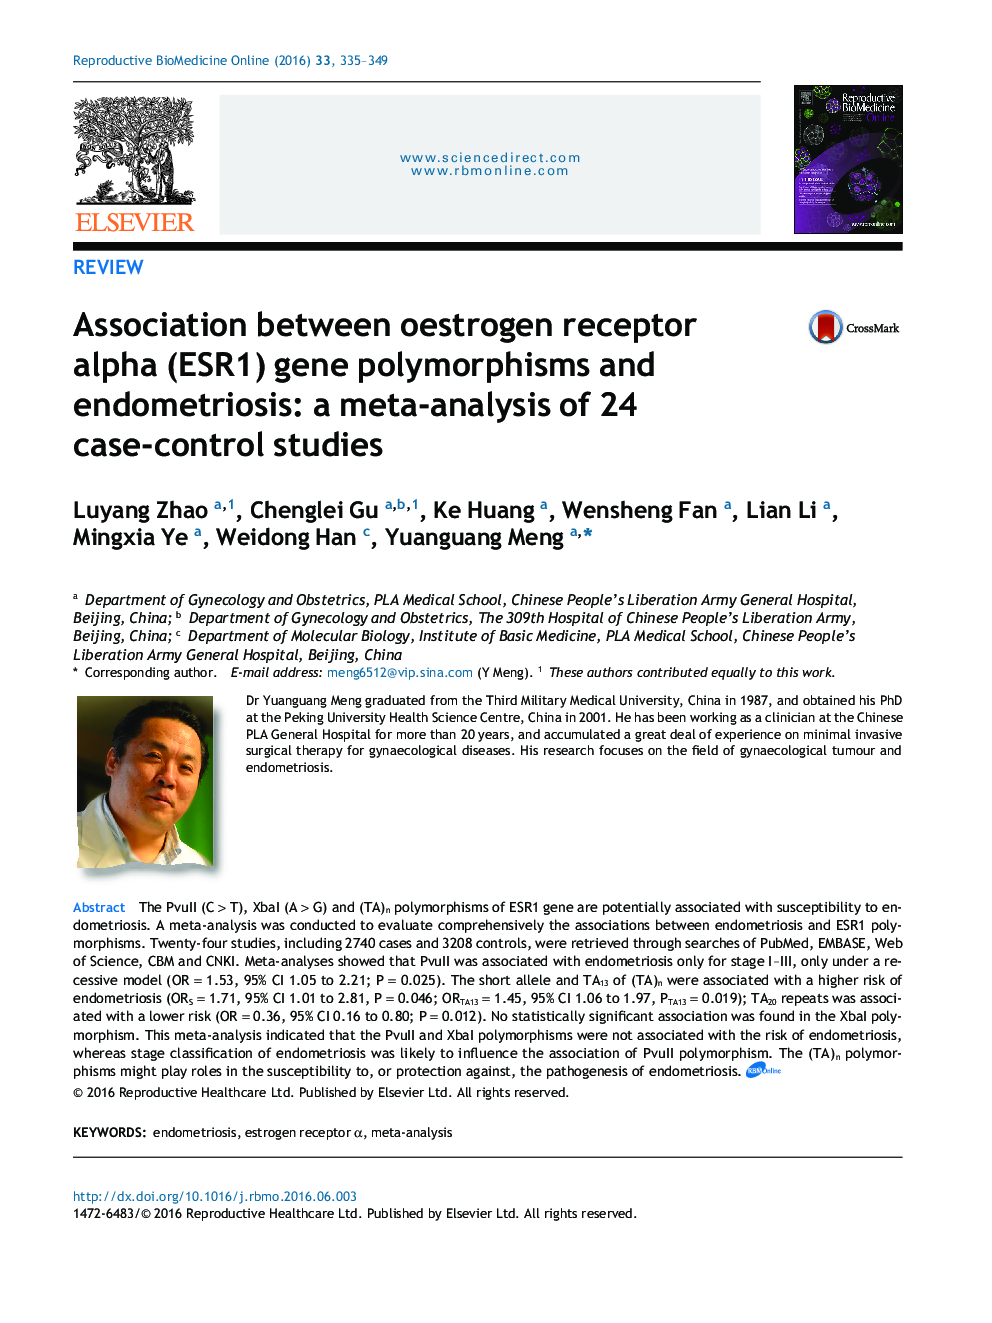 Association between oestrogen receptor alpha (ESR1) gene polymorphisms and endometriosis: a meta-analysis of 24 case-control studies